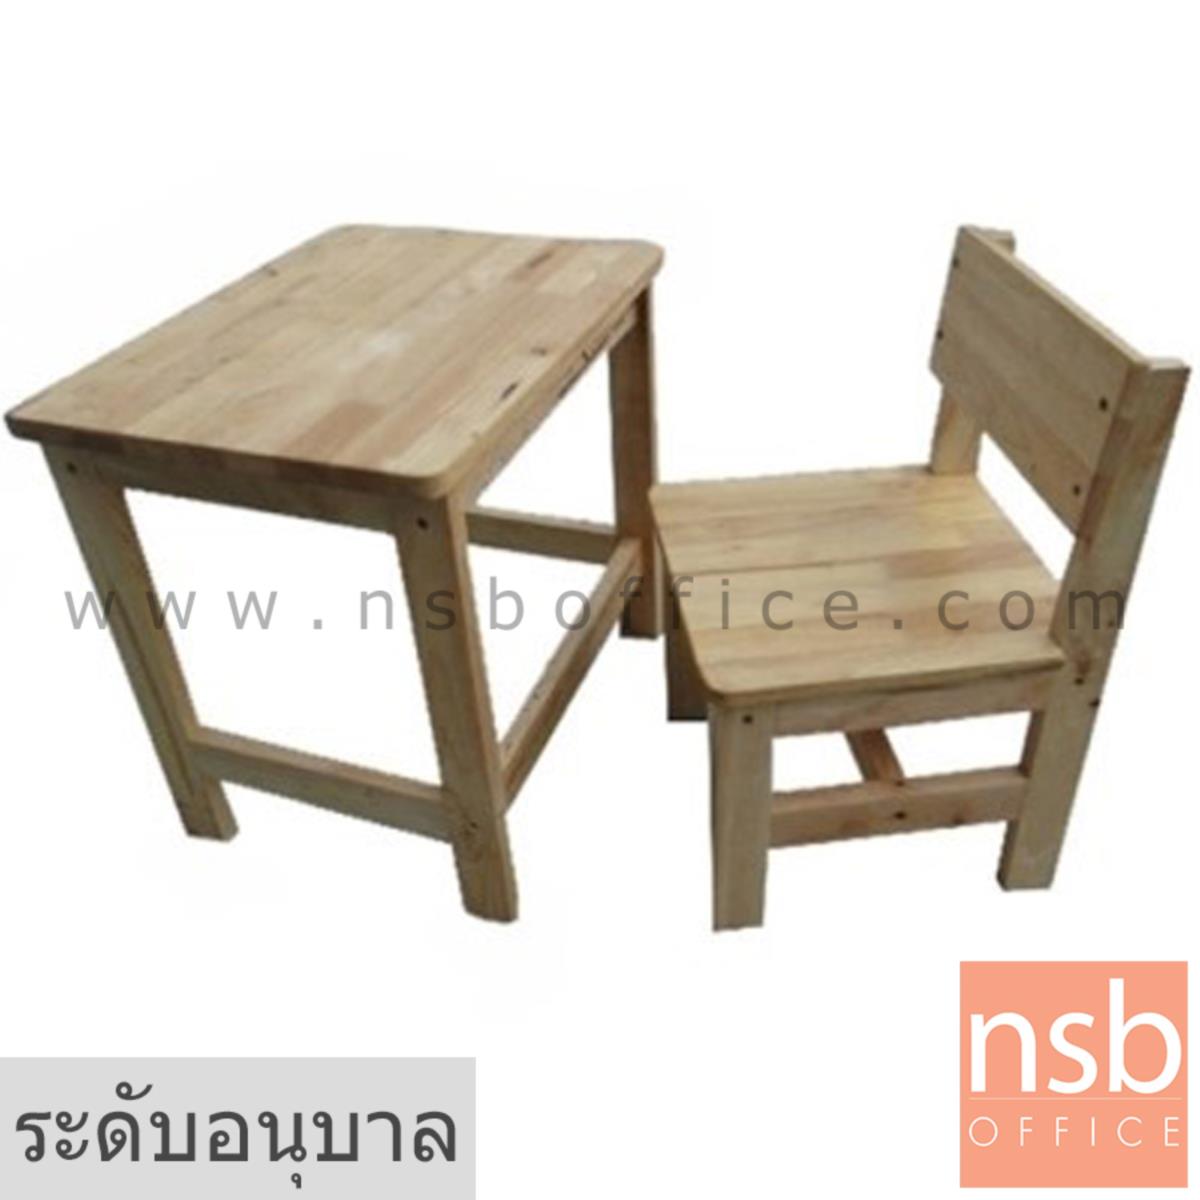 A17A062:ชุดโต๊ะและเก้าอี้นักเรียนไม้พาราล้วน รุ่น MAINE (เมน)  ระดับอนุบาล